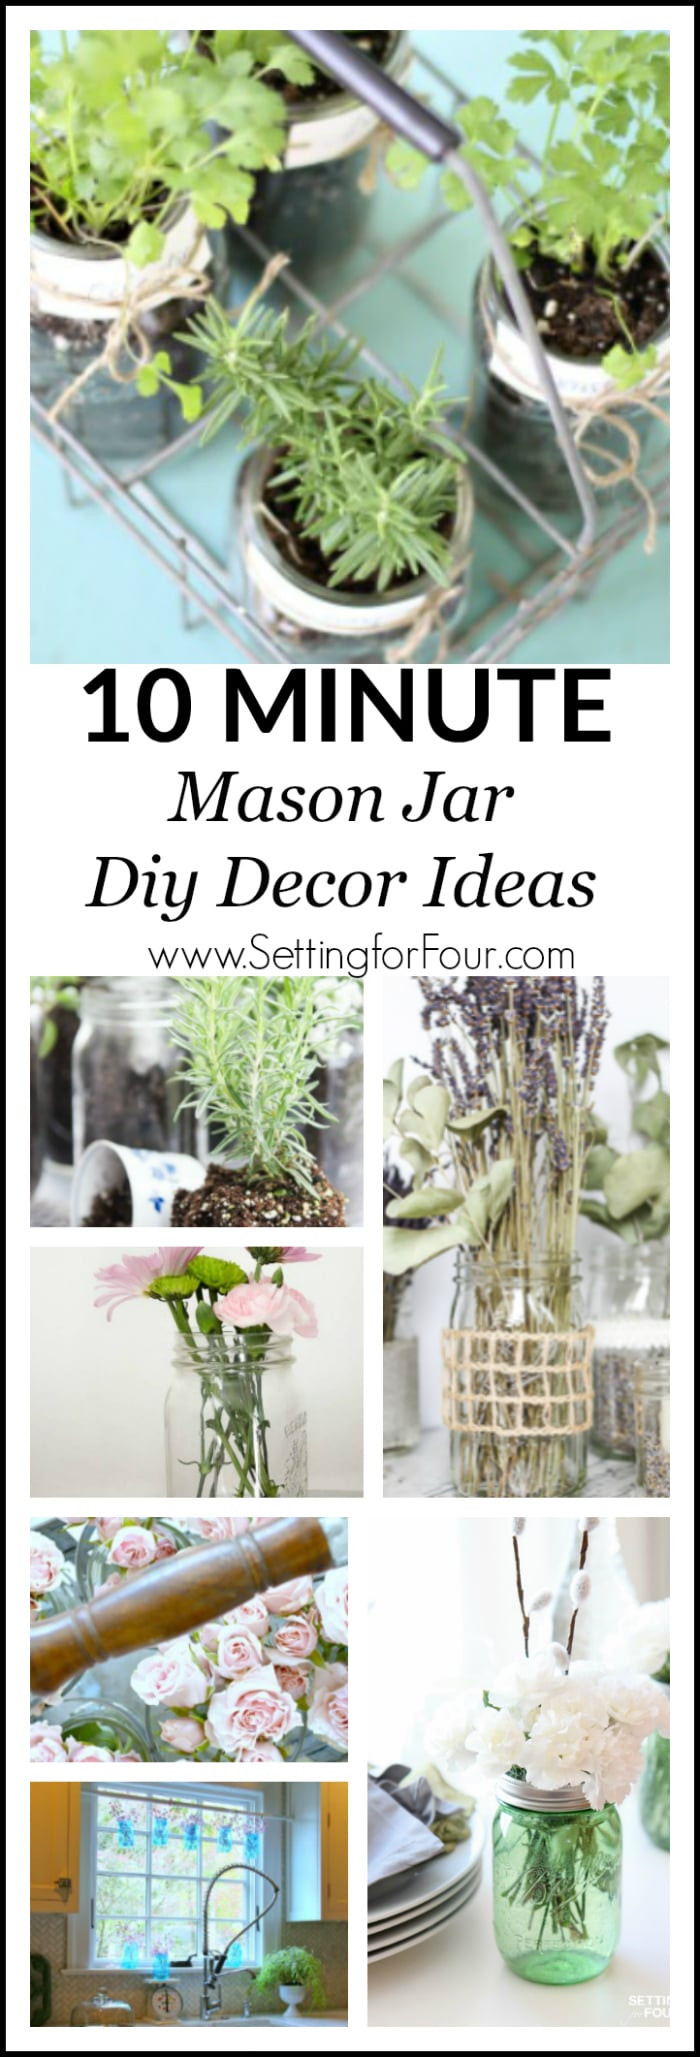 DIY Mason Jar Decor Ideas
 Quick and Easy Mason Jar Centerpieces Setting for Four